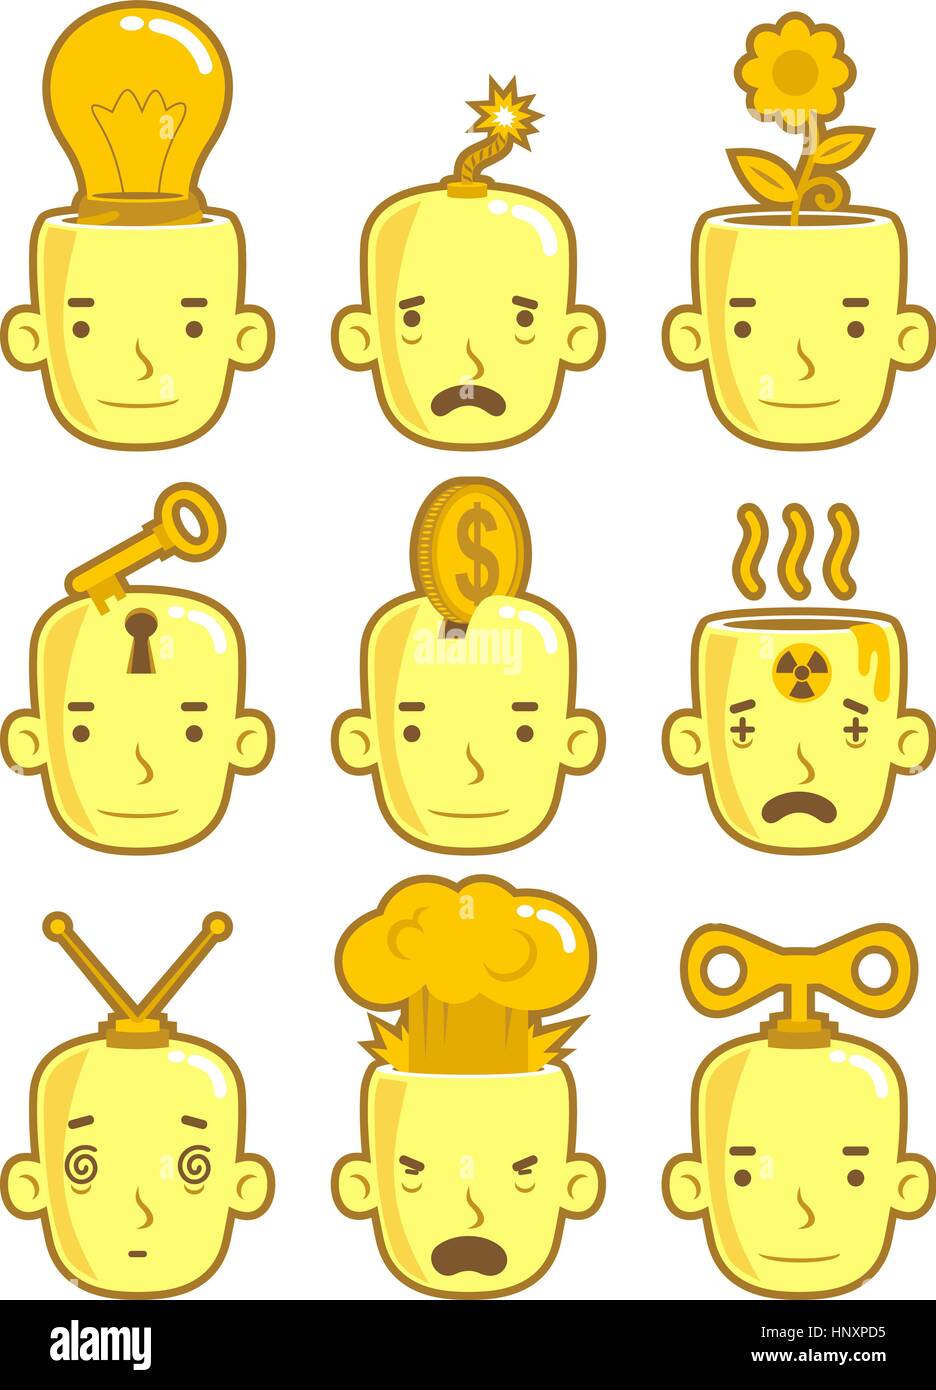 Avatar Kopf Menschen Ausdrücke Profil Charakter Cartoon Front View Konzepte, Vektor-Illustration. Stock Vektor